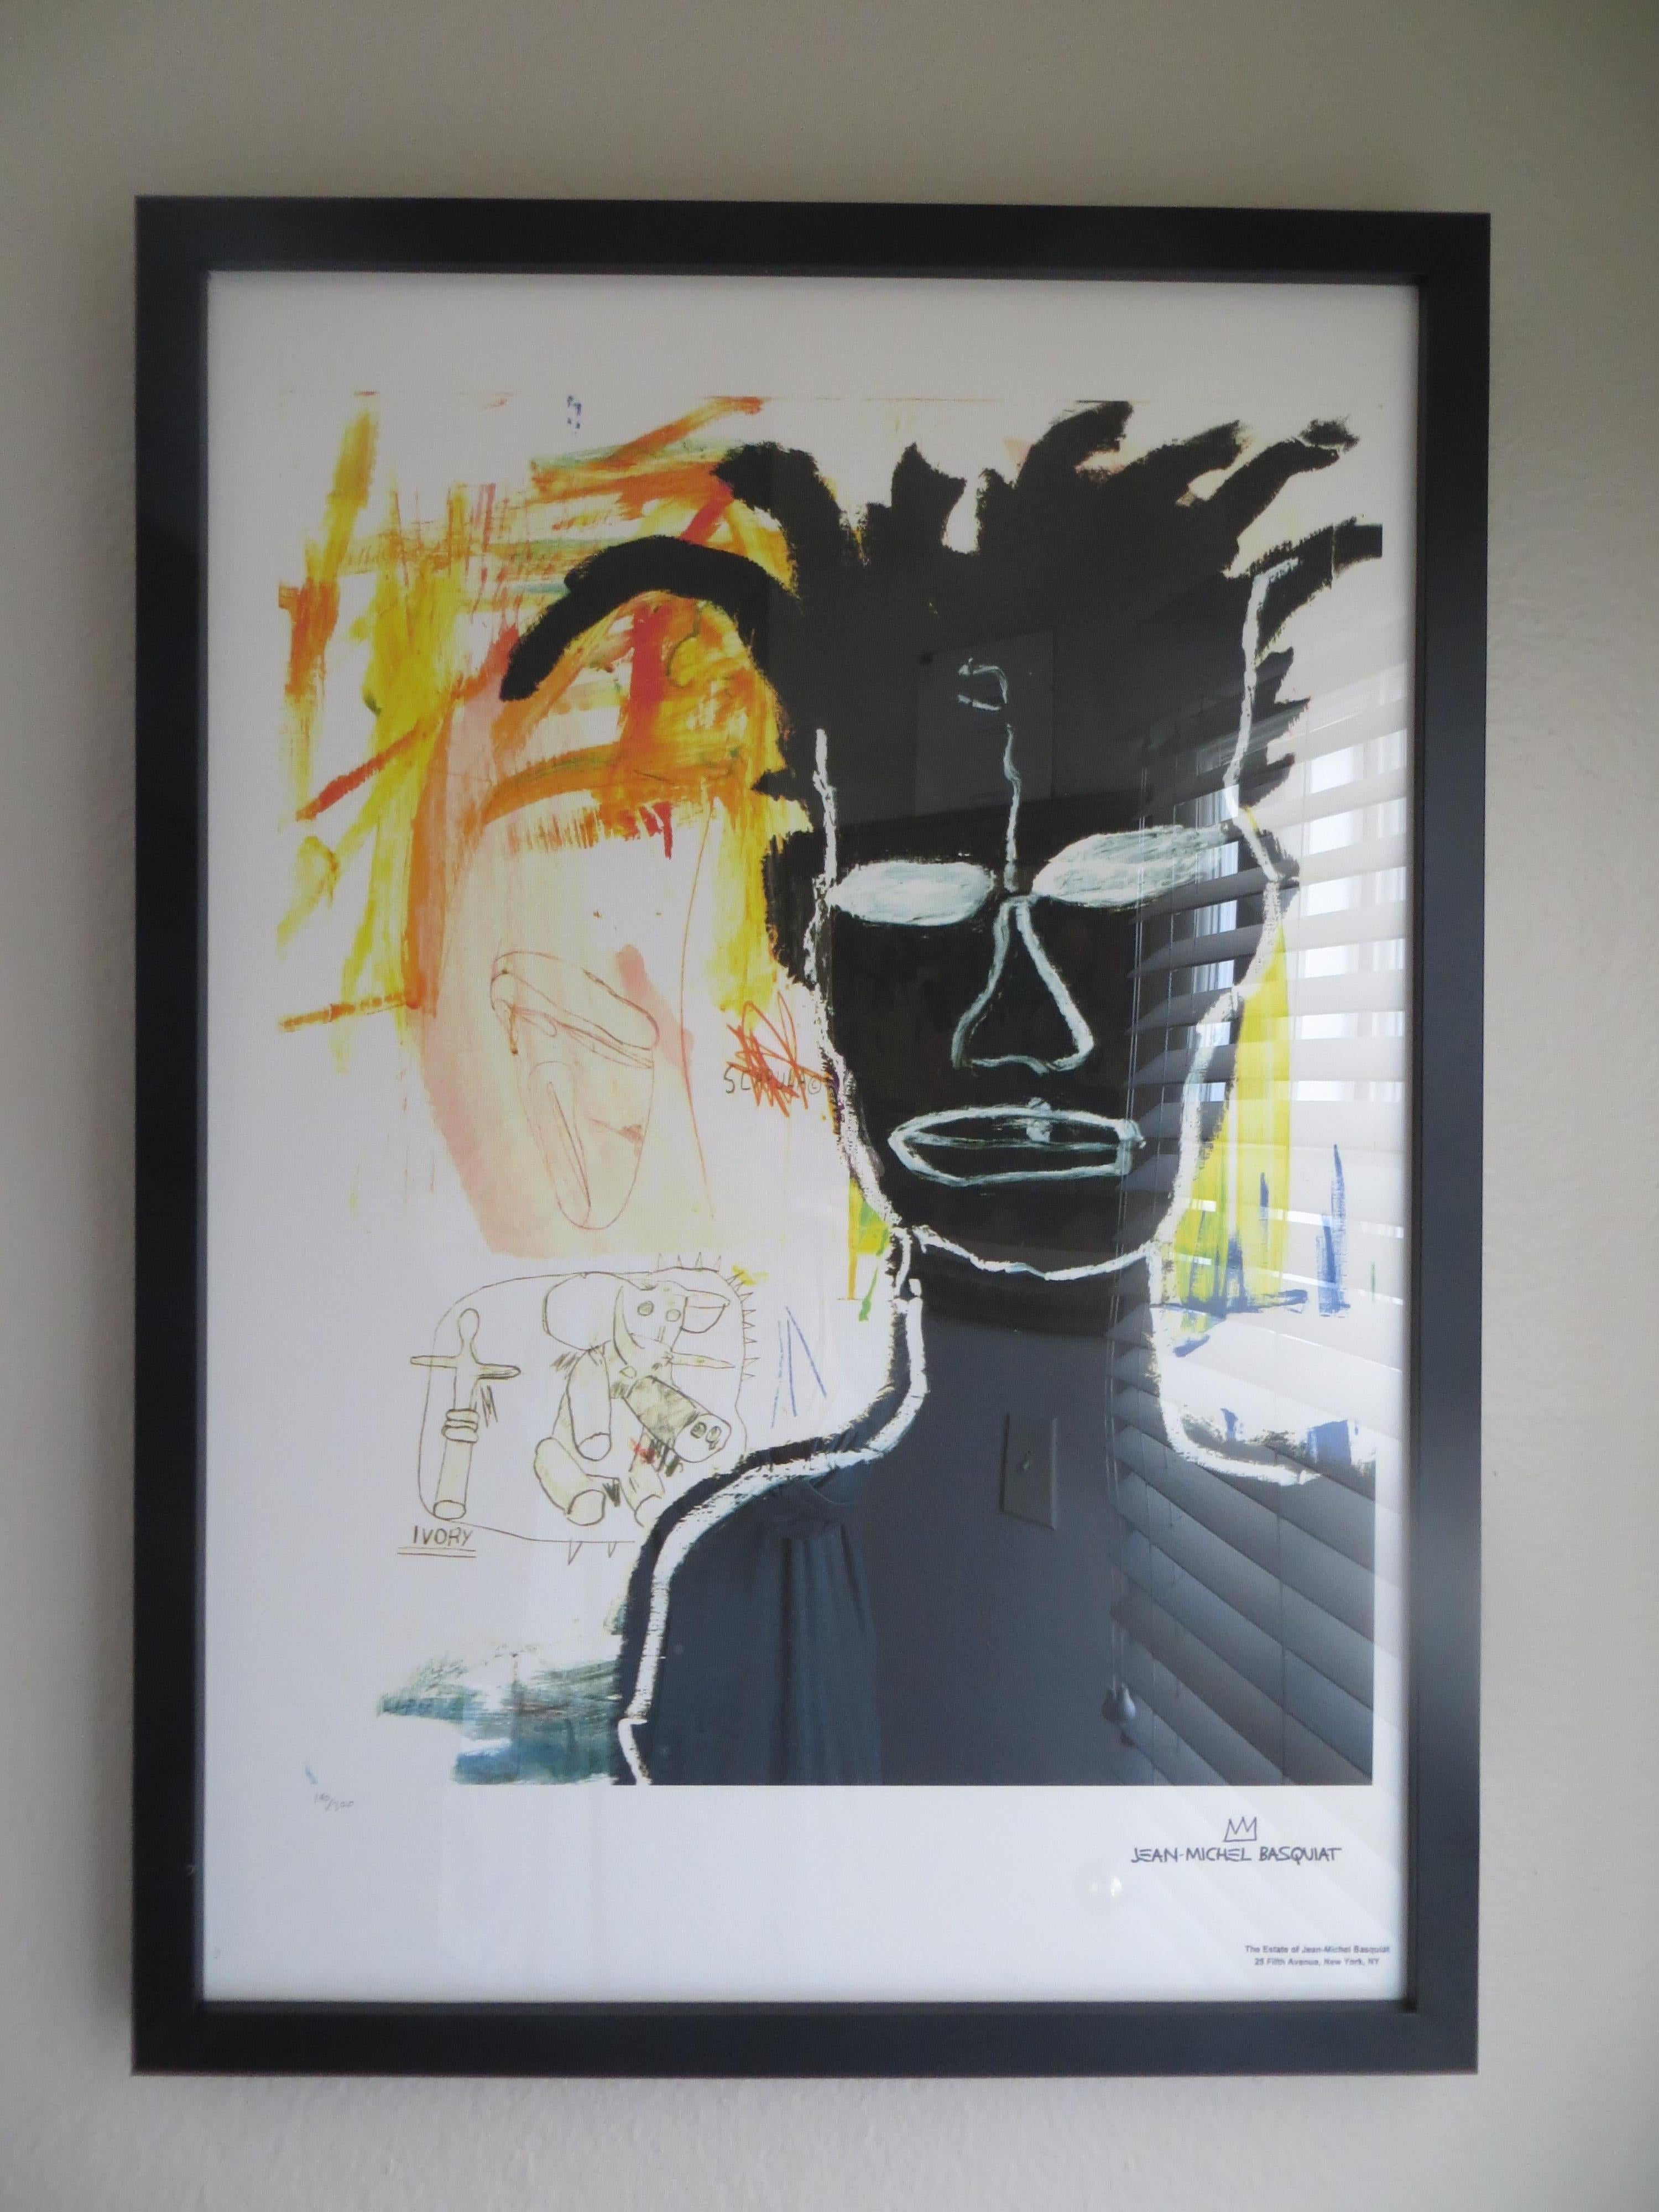 The Estate of Jean-Michel Basquiat, Self Portrait  Lithograph, Ltd 140  /300